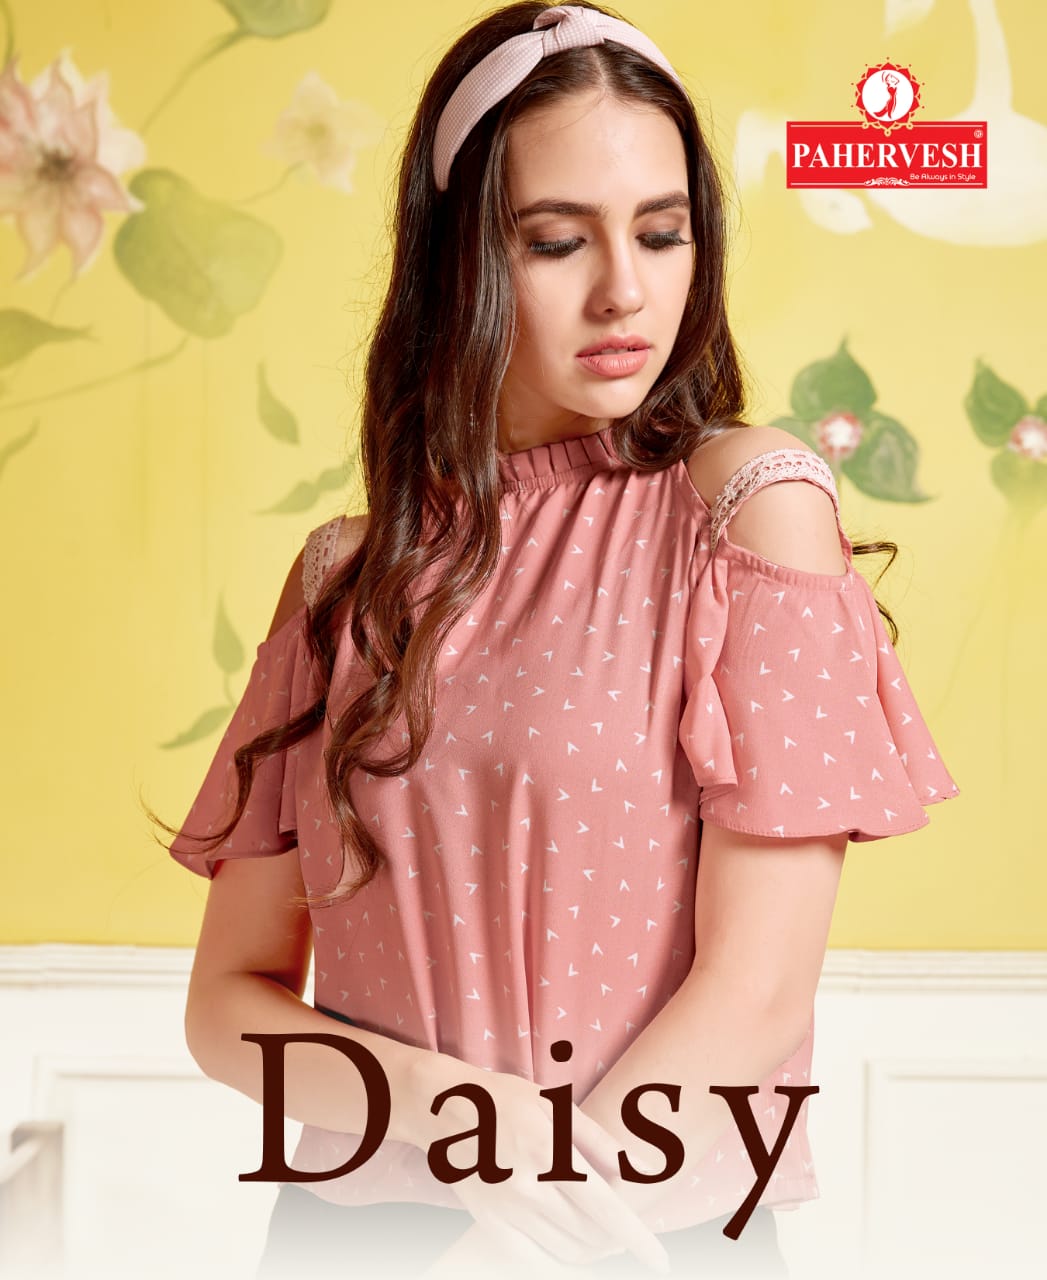 Pahervesh Daisy Designer Moss Fabrics Western Wear Short Top Seller